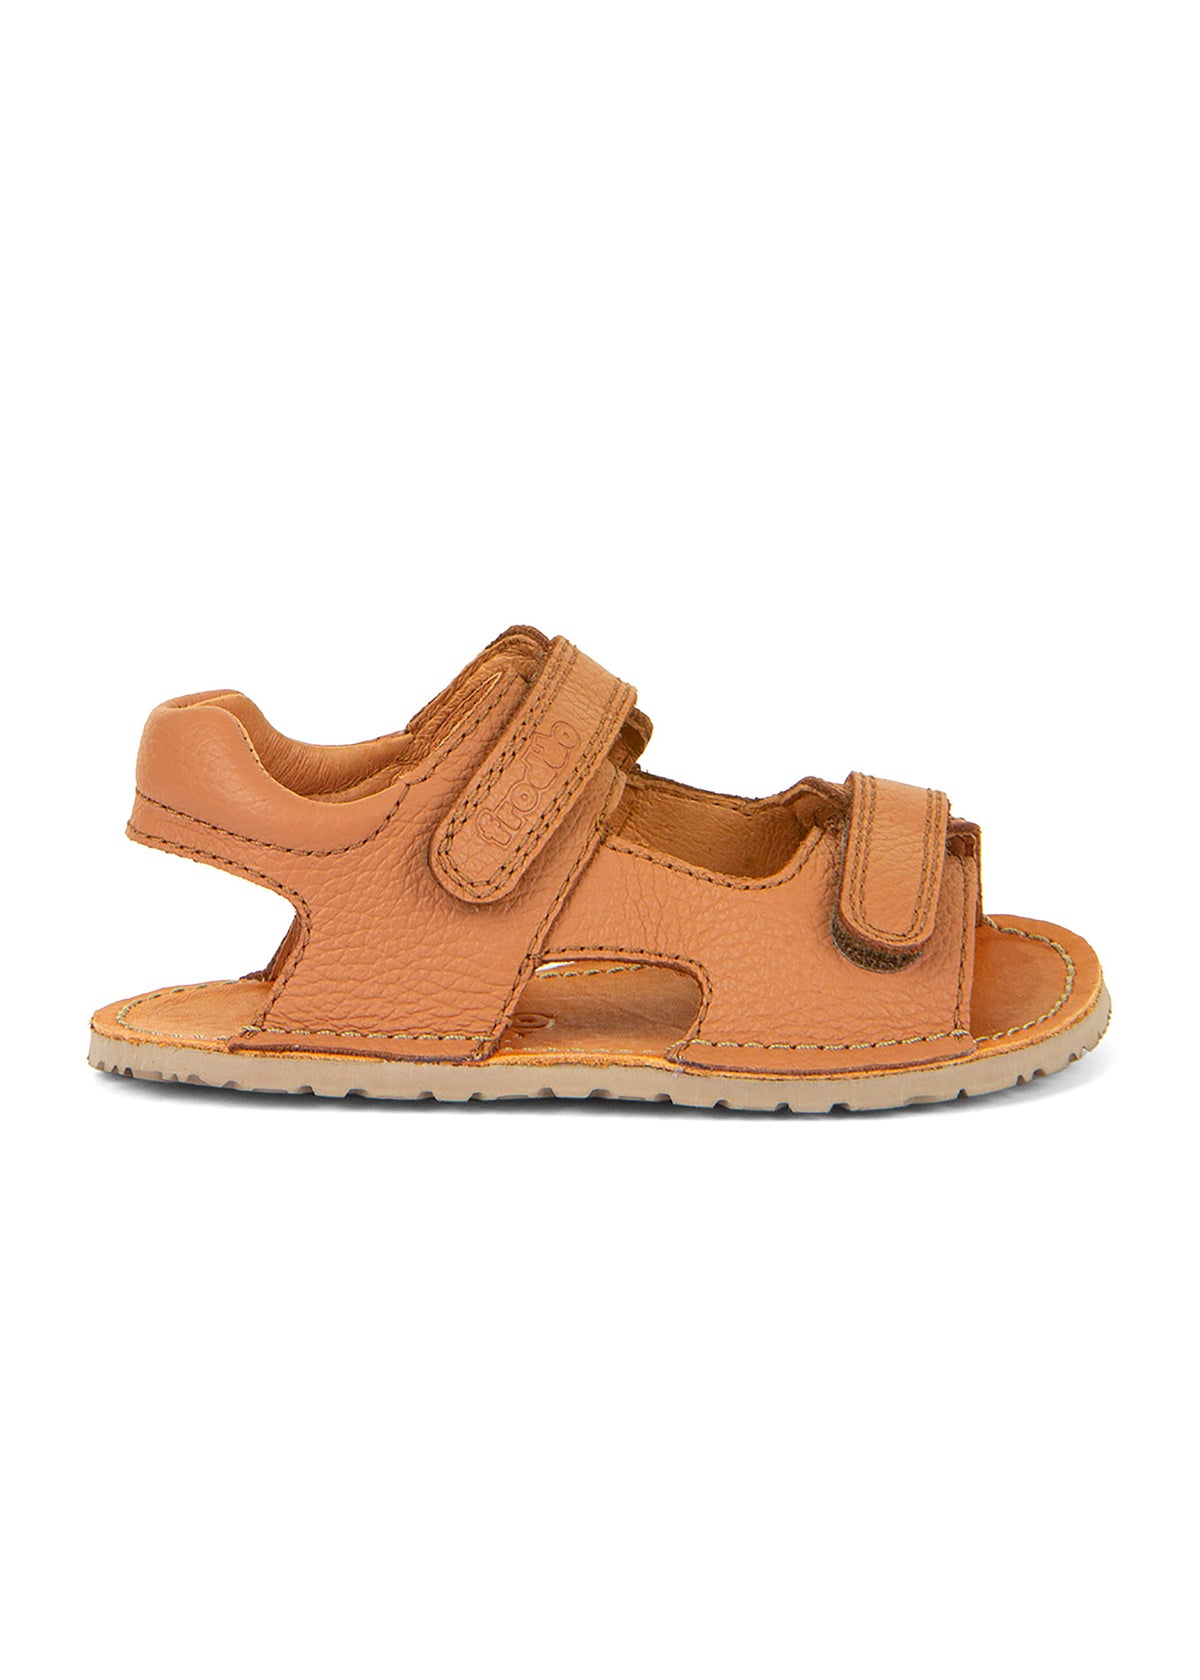 Children's barefoot sandals, Flexy Mini - cognac brown